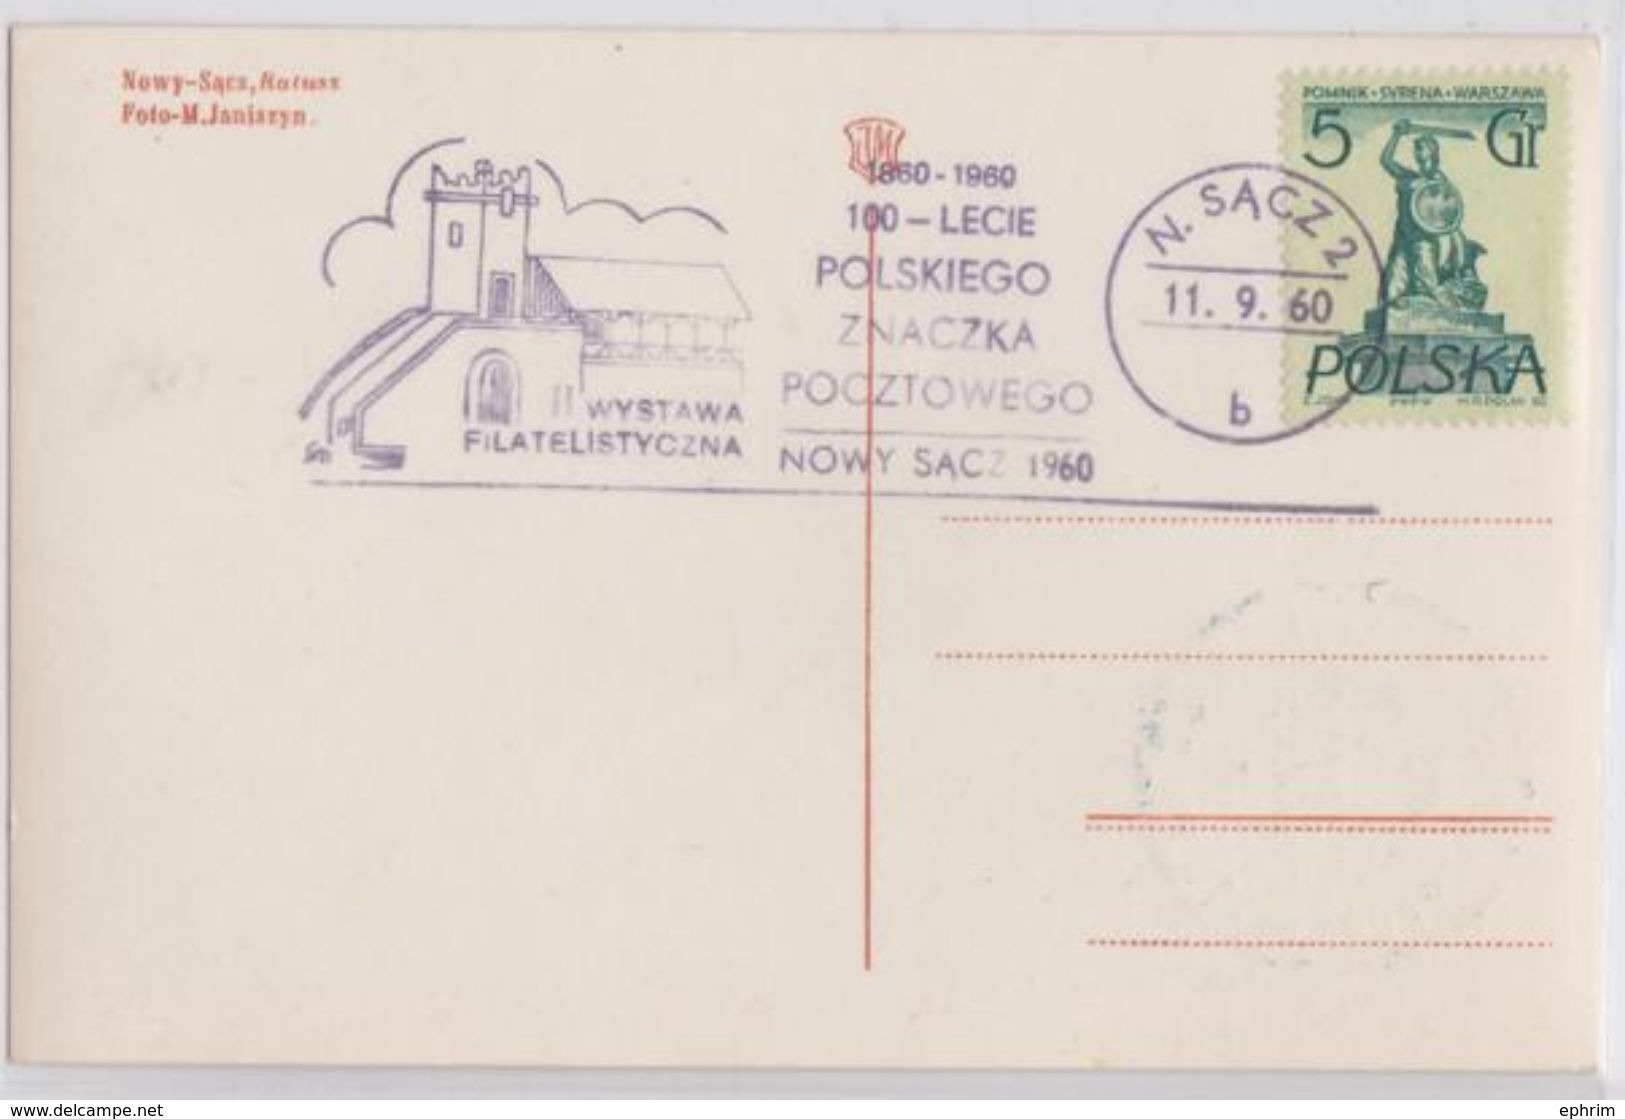 NOWY-SACZ (Poland Polska Polen Pologne) - Ratusz - Stamp Cancellation 1960 - Affranchissement Timbre - Pologne